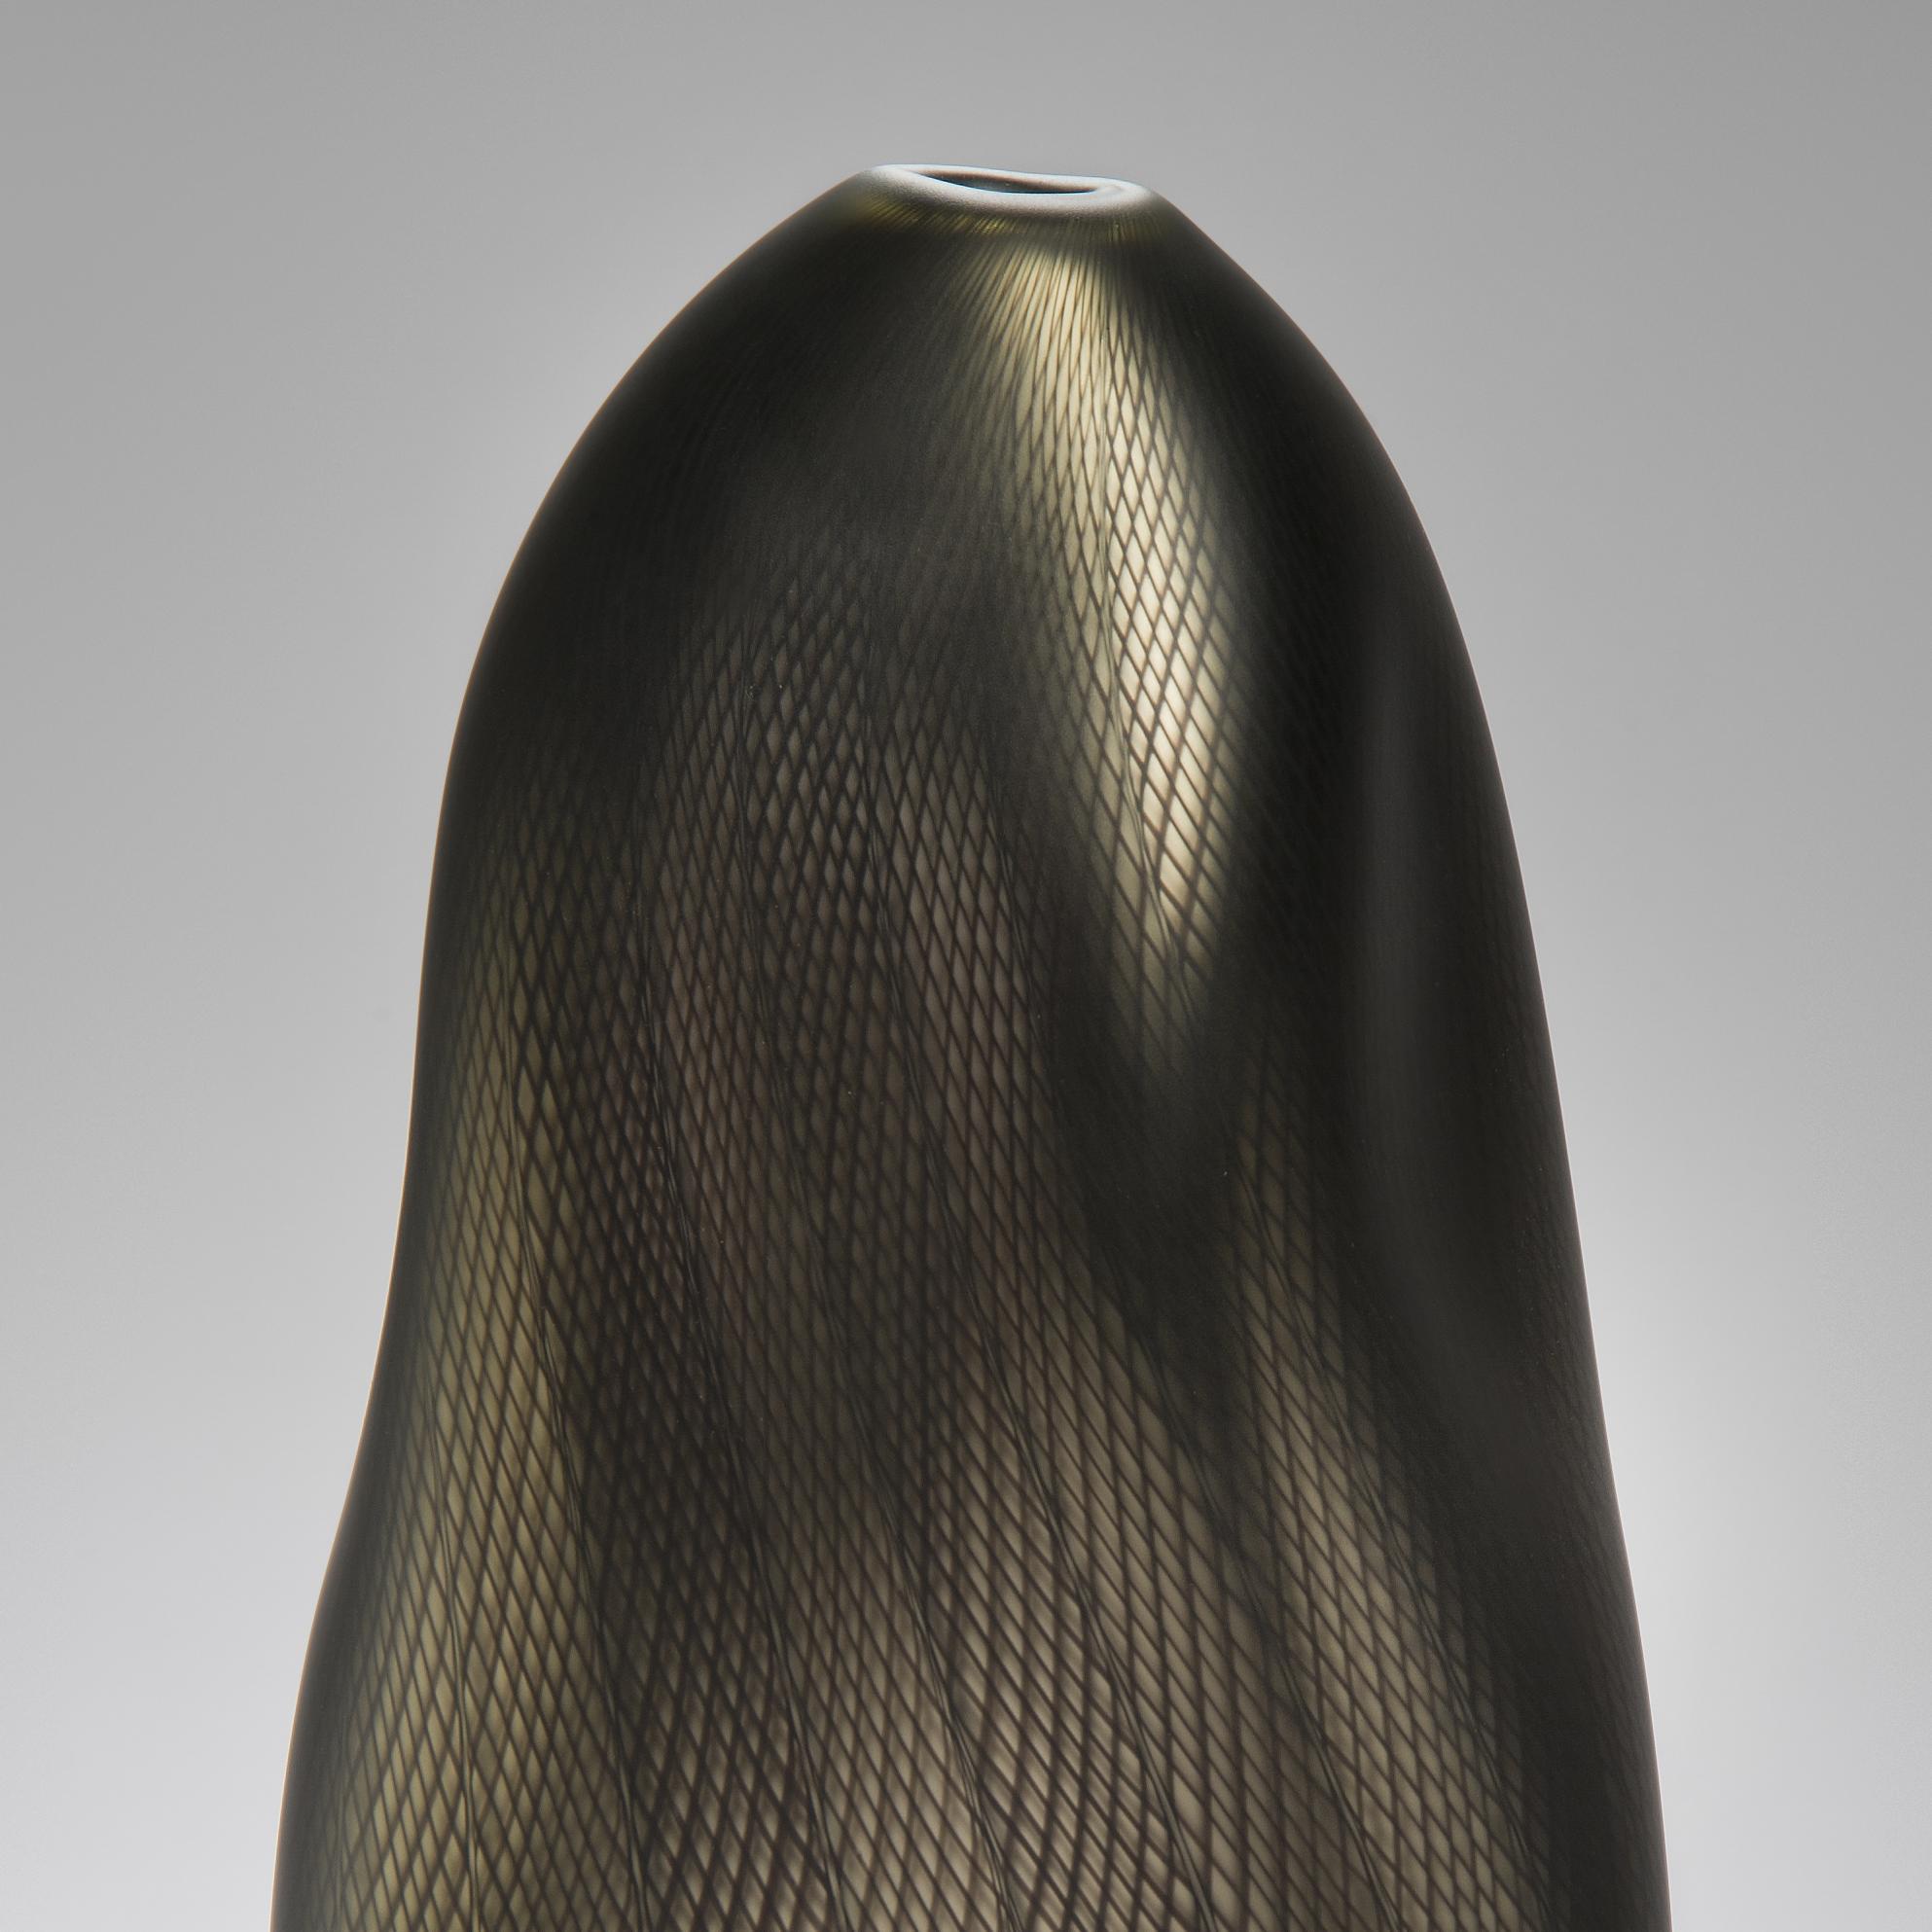 Organic Modern Stratiform Aes Zanfirico 001, a Unique Bronze Glass Sculpture by Liam Reeves